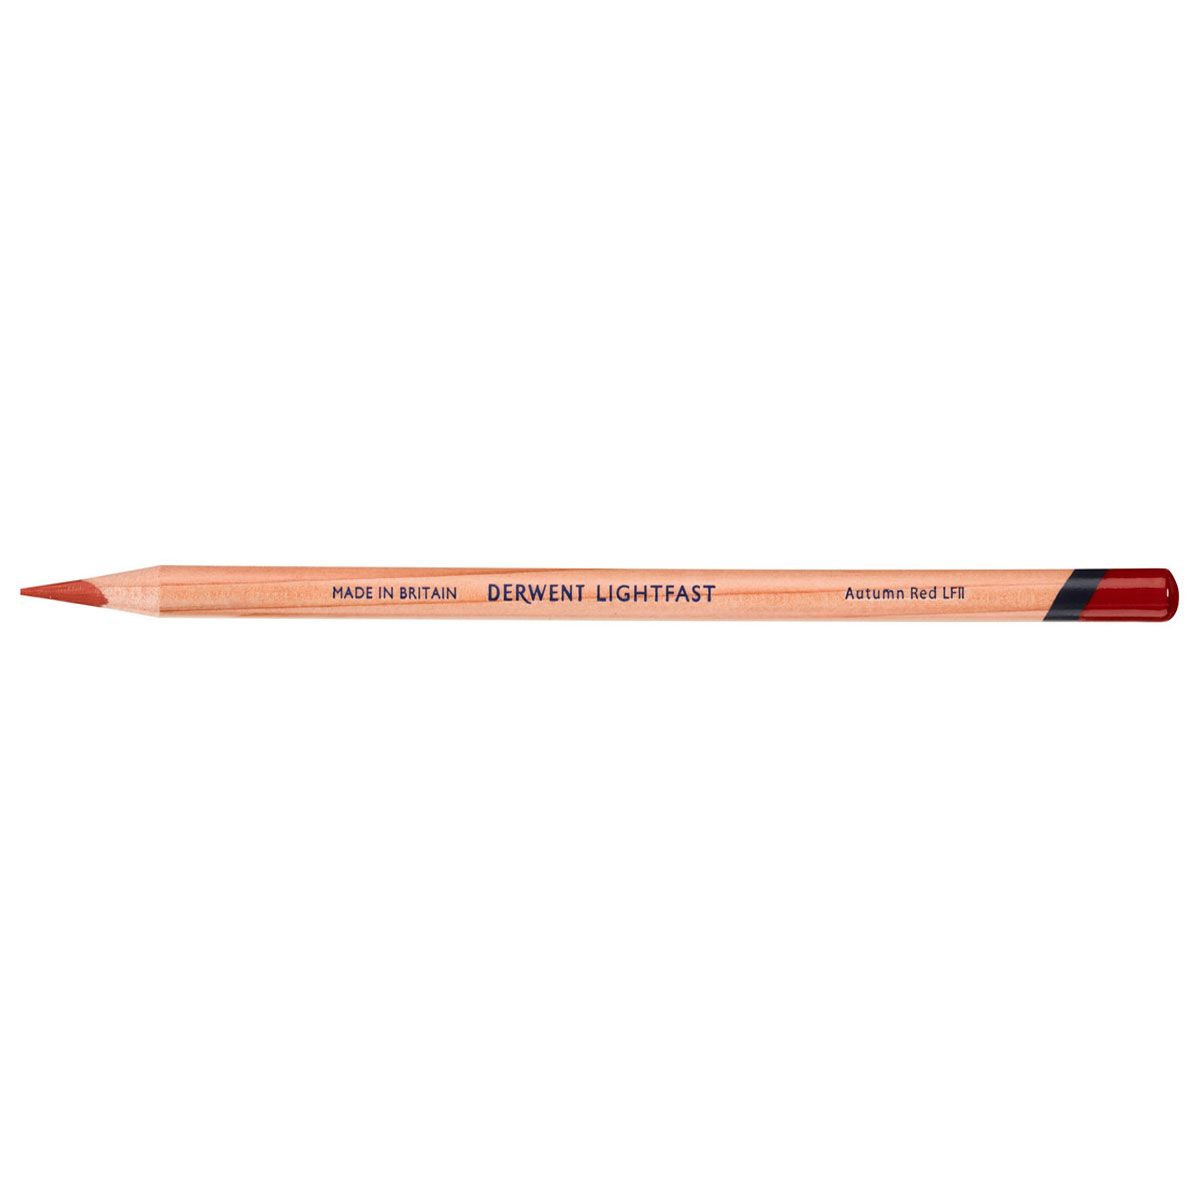 NEW Derwent Lightfast Pencil Colour: Autumn Red